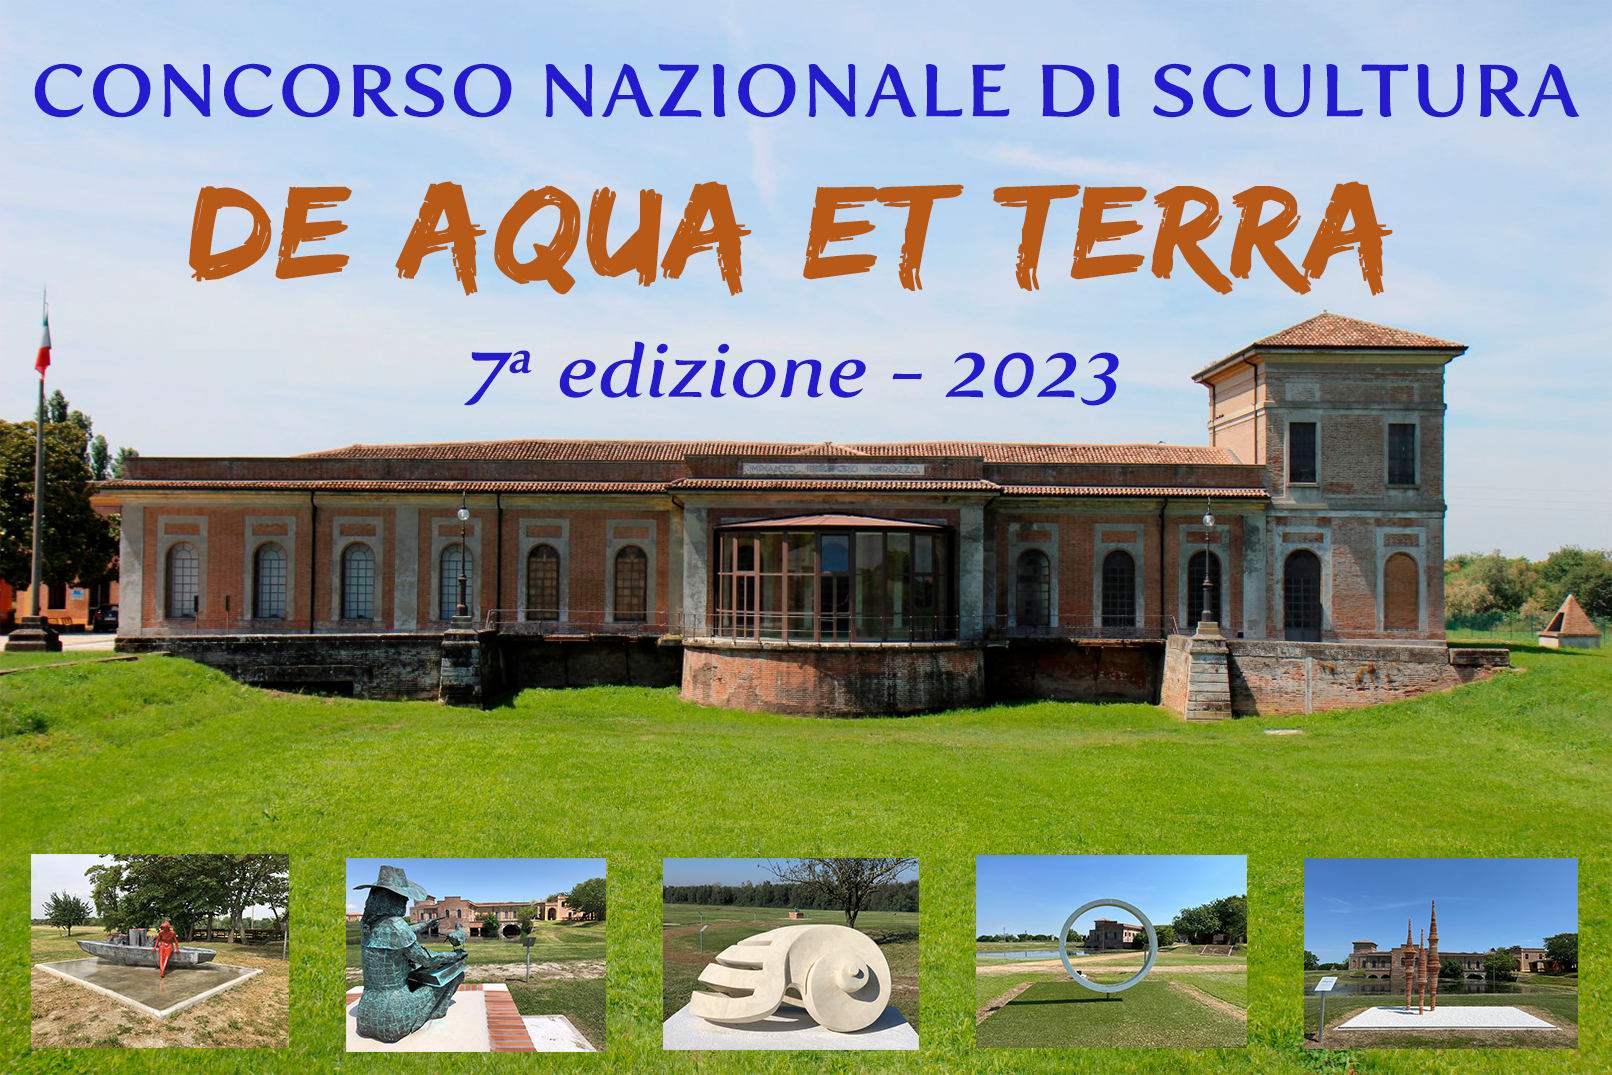 Concorso nazionale di scultura "De Aqua et Terra" 2023